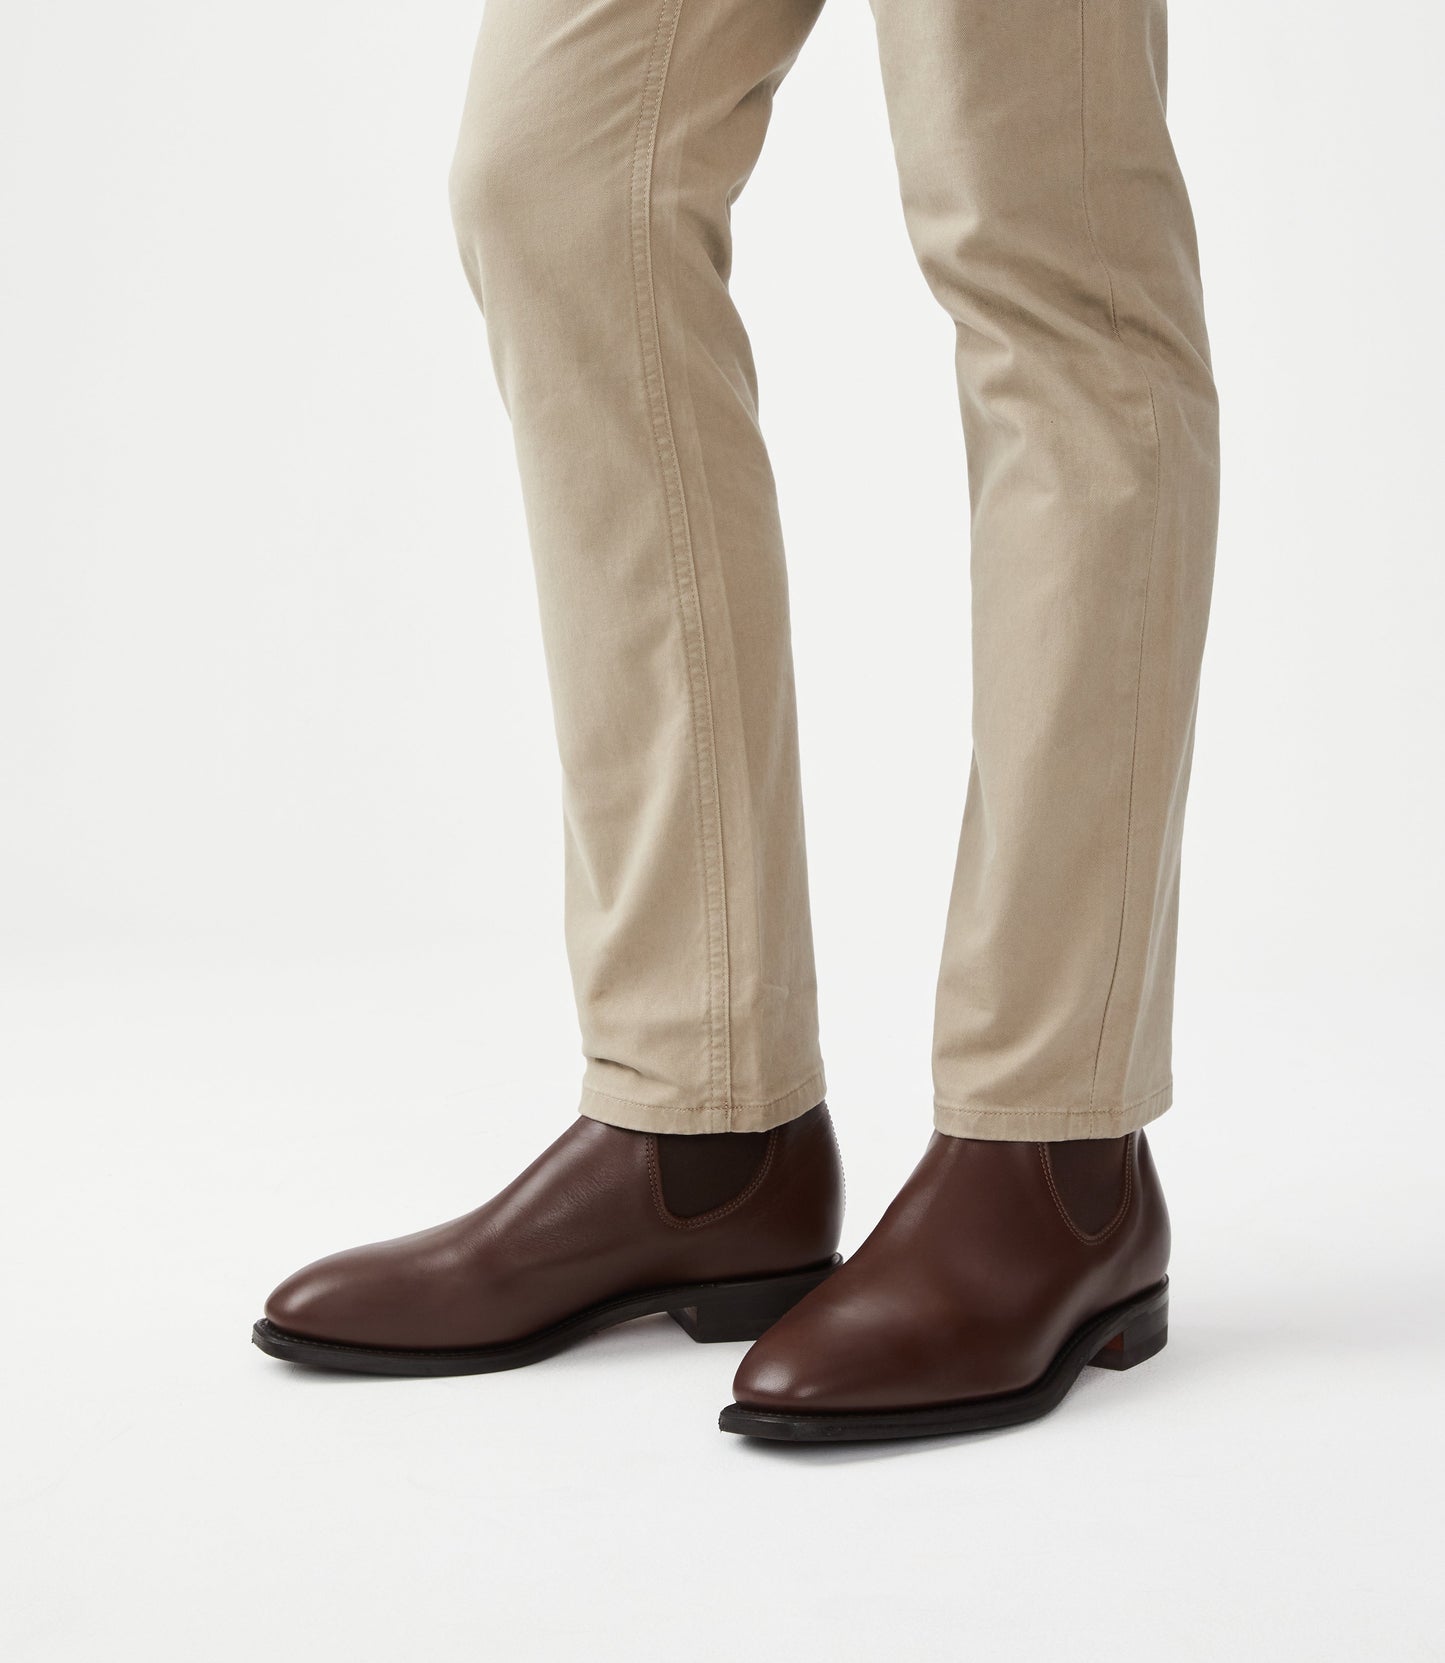 Comfort craftsman boot - dark tan leather Boots R.M.